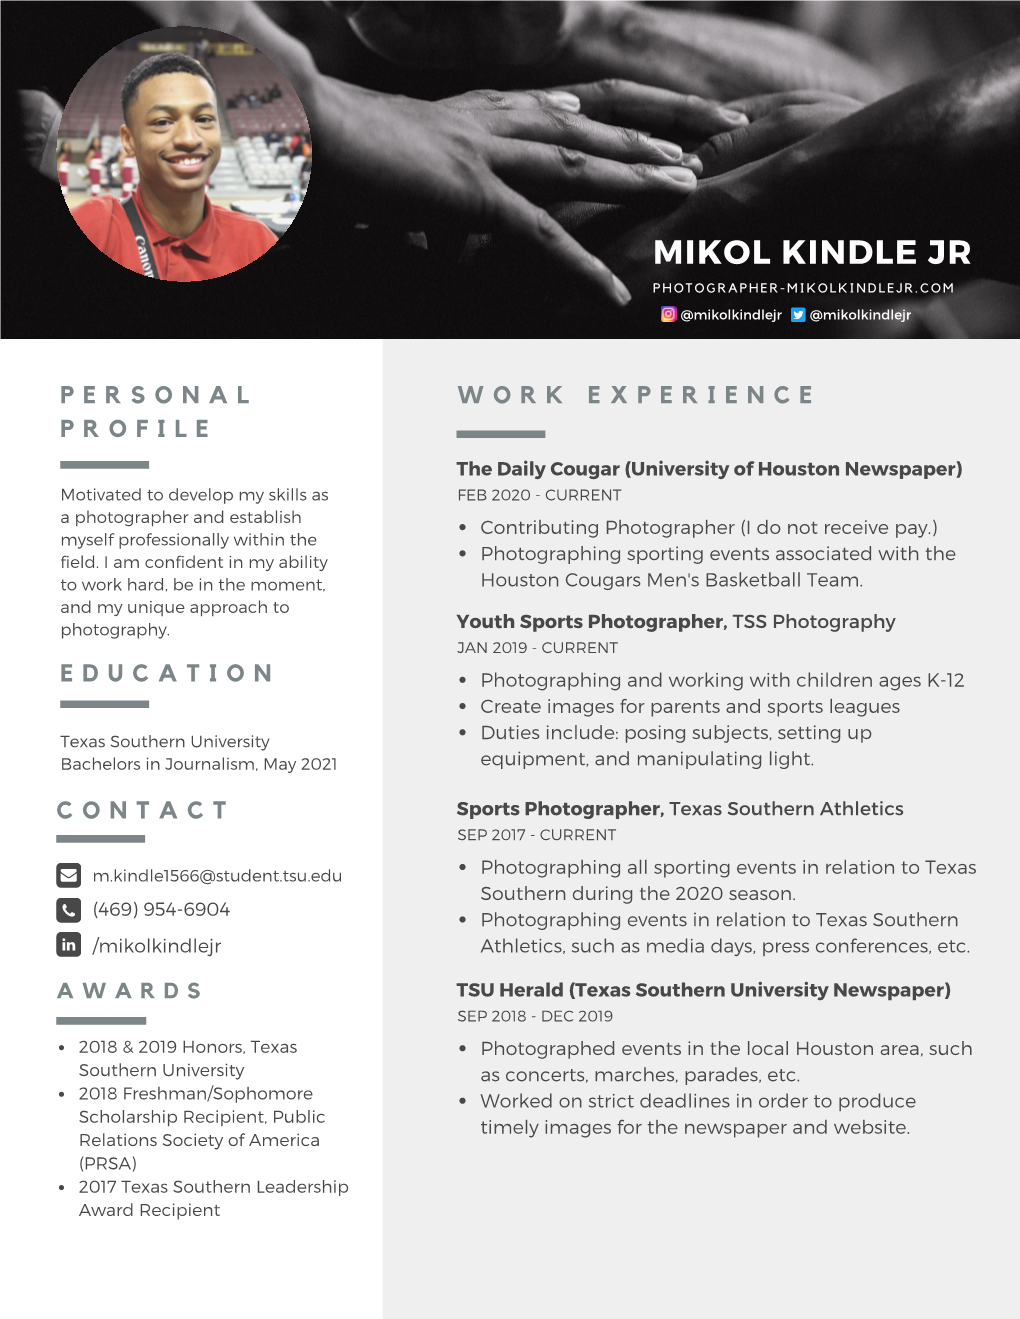 Mikol Kindle Jr Resume